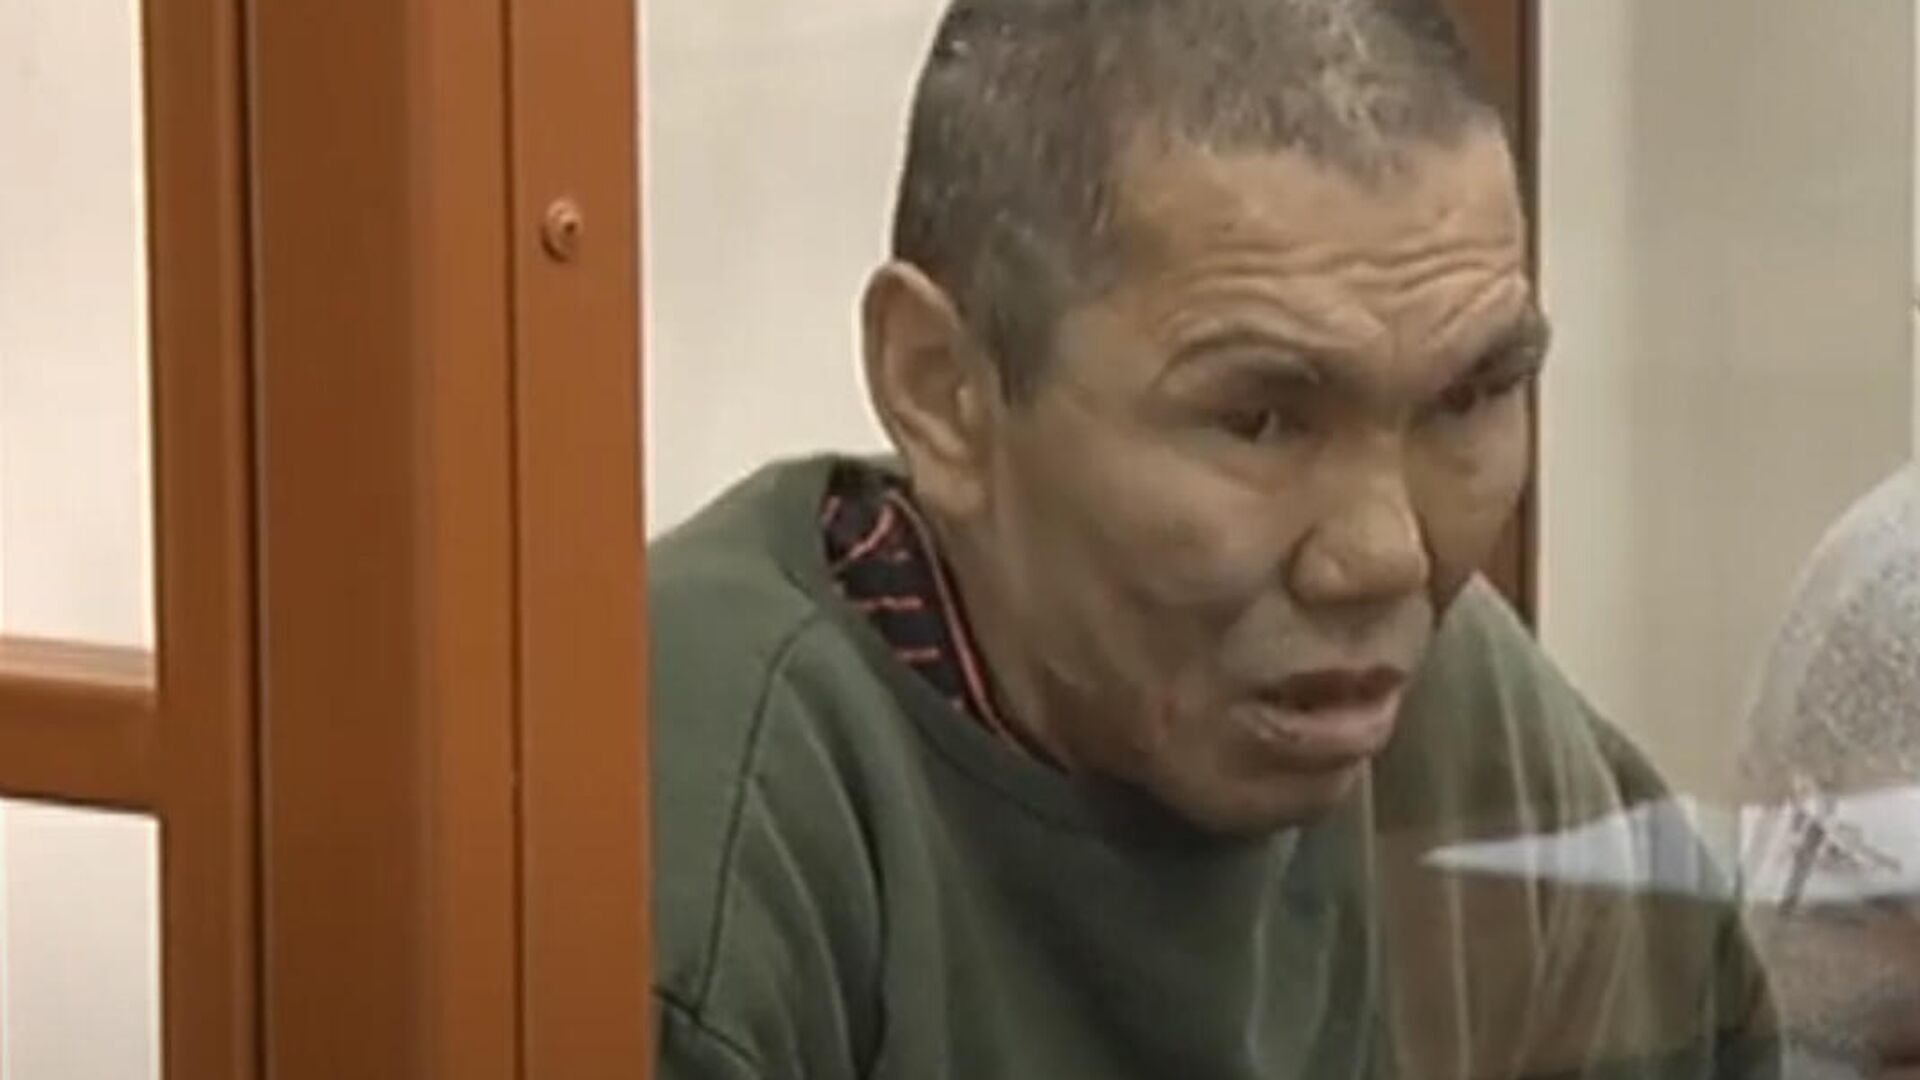 "Заживо сжег младенца": почему отпустили убийцу из Хакасии